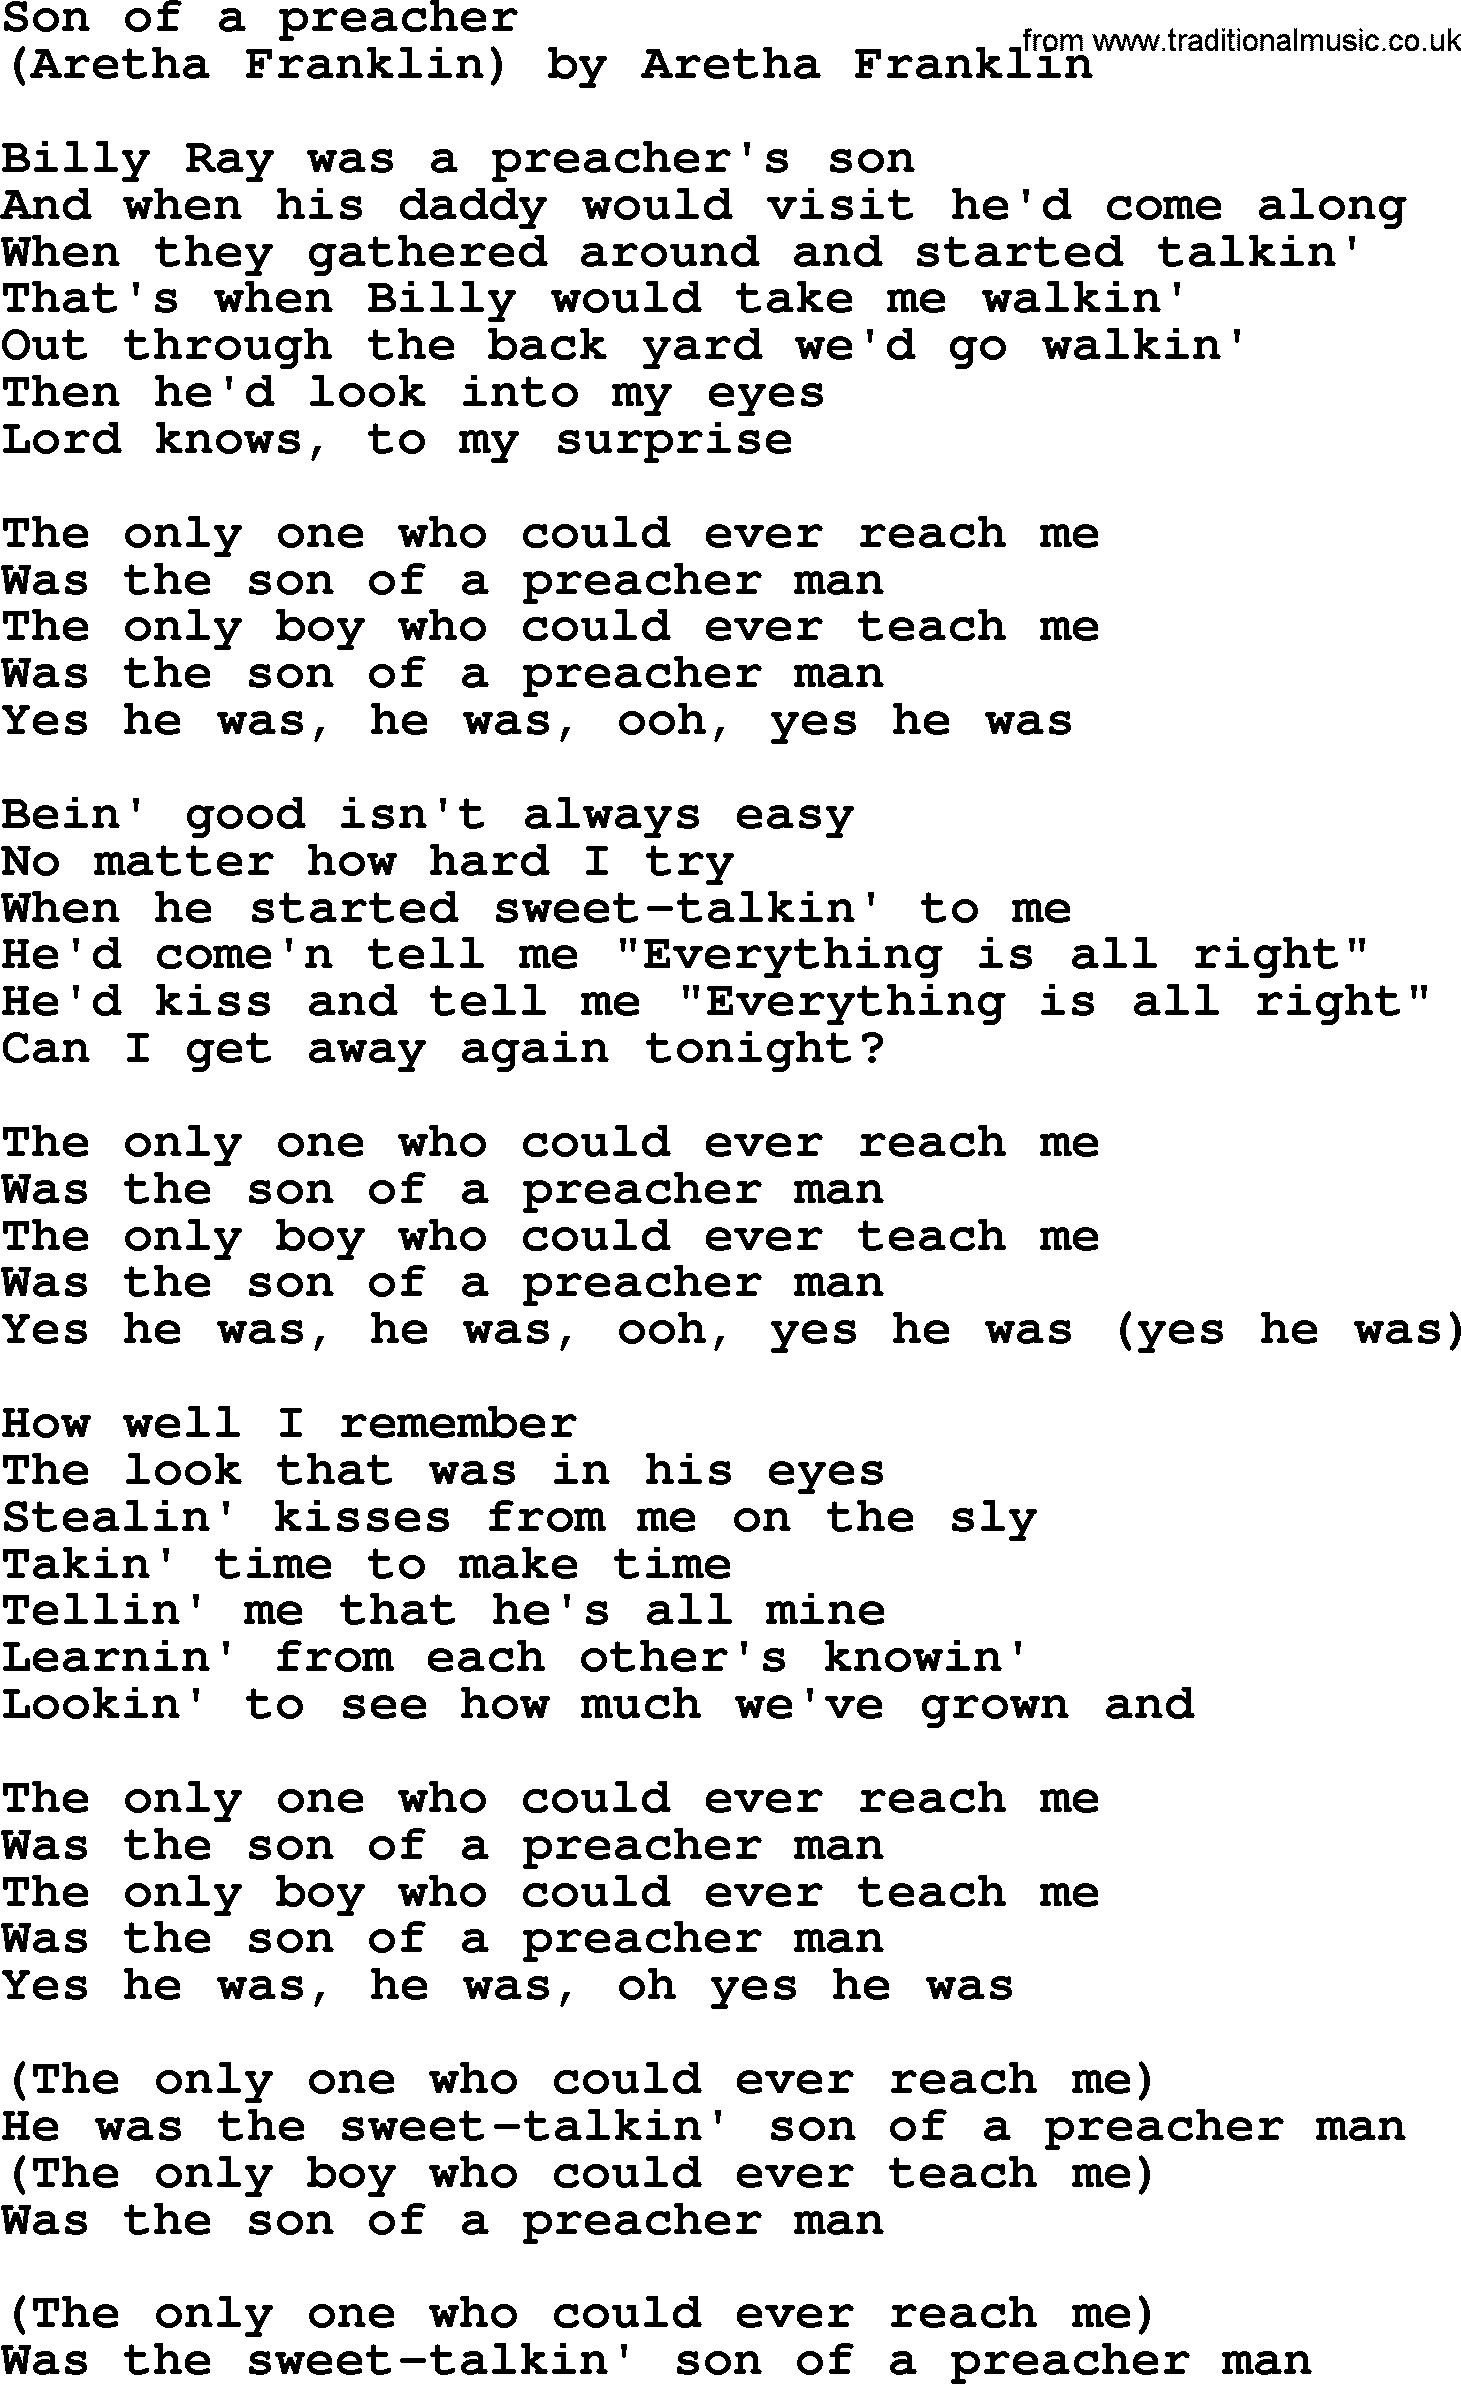 Bruce Springsteen song Son Of A Preacher, lyrics